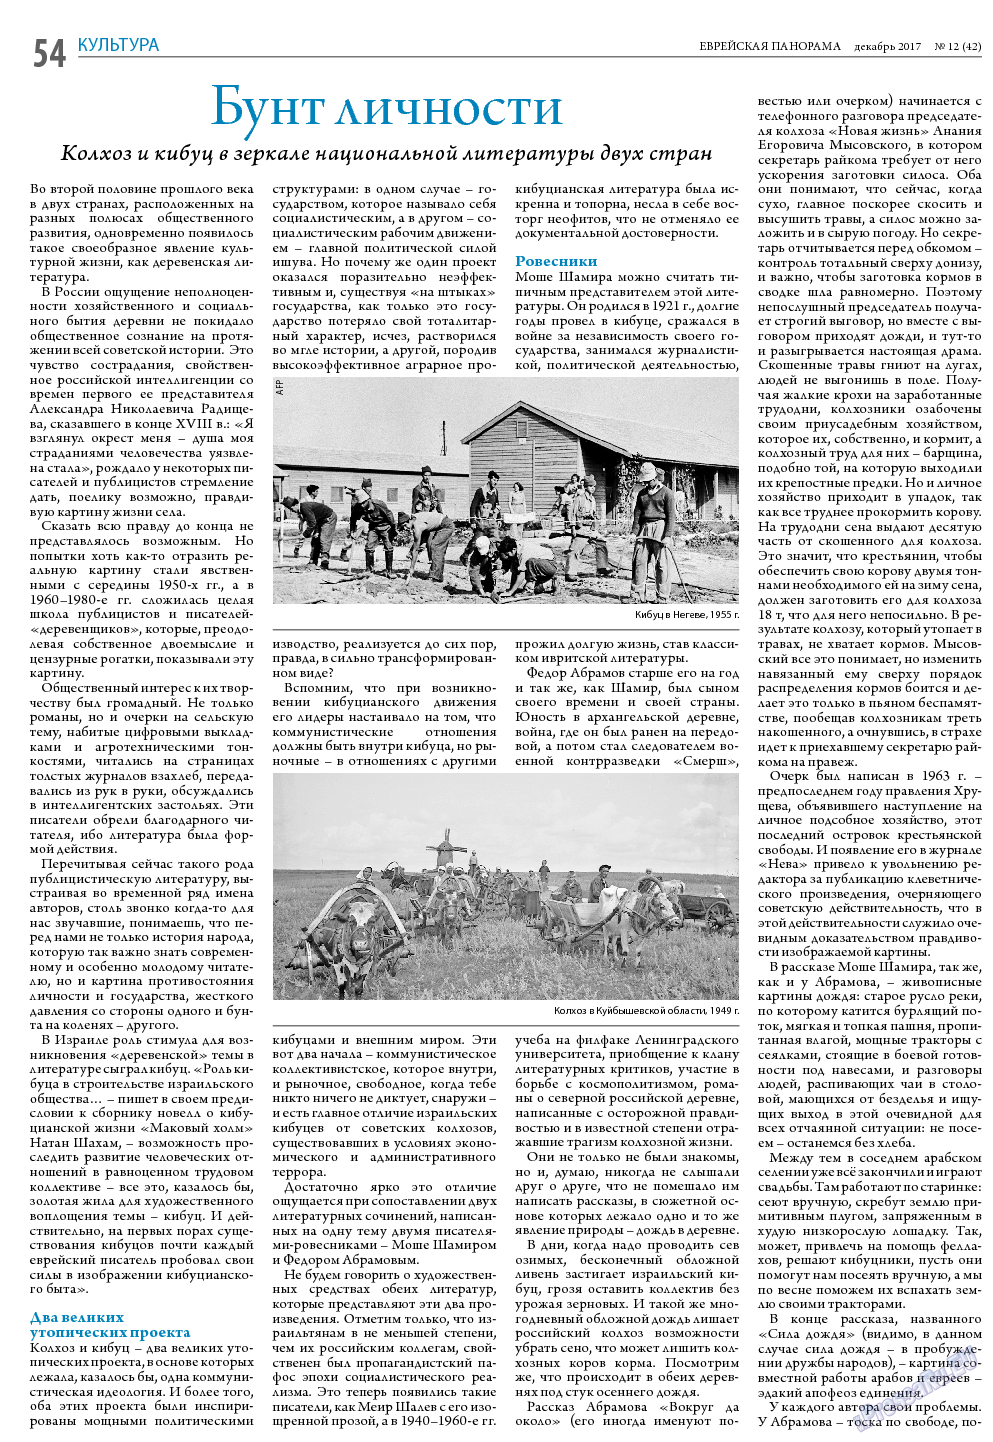 Еврейская панорама, газета. 2017 №12 стр.54